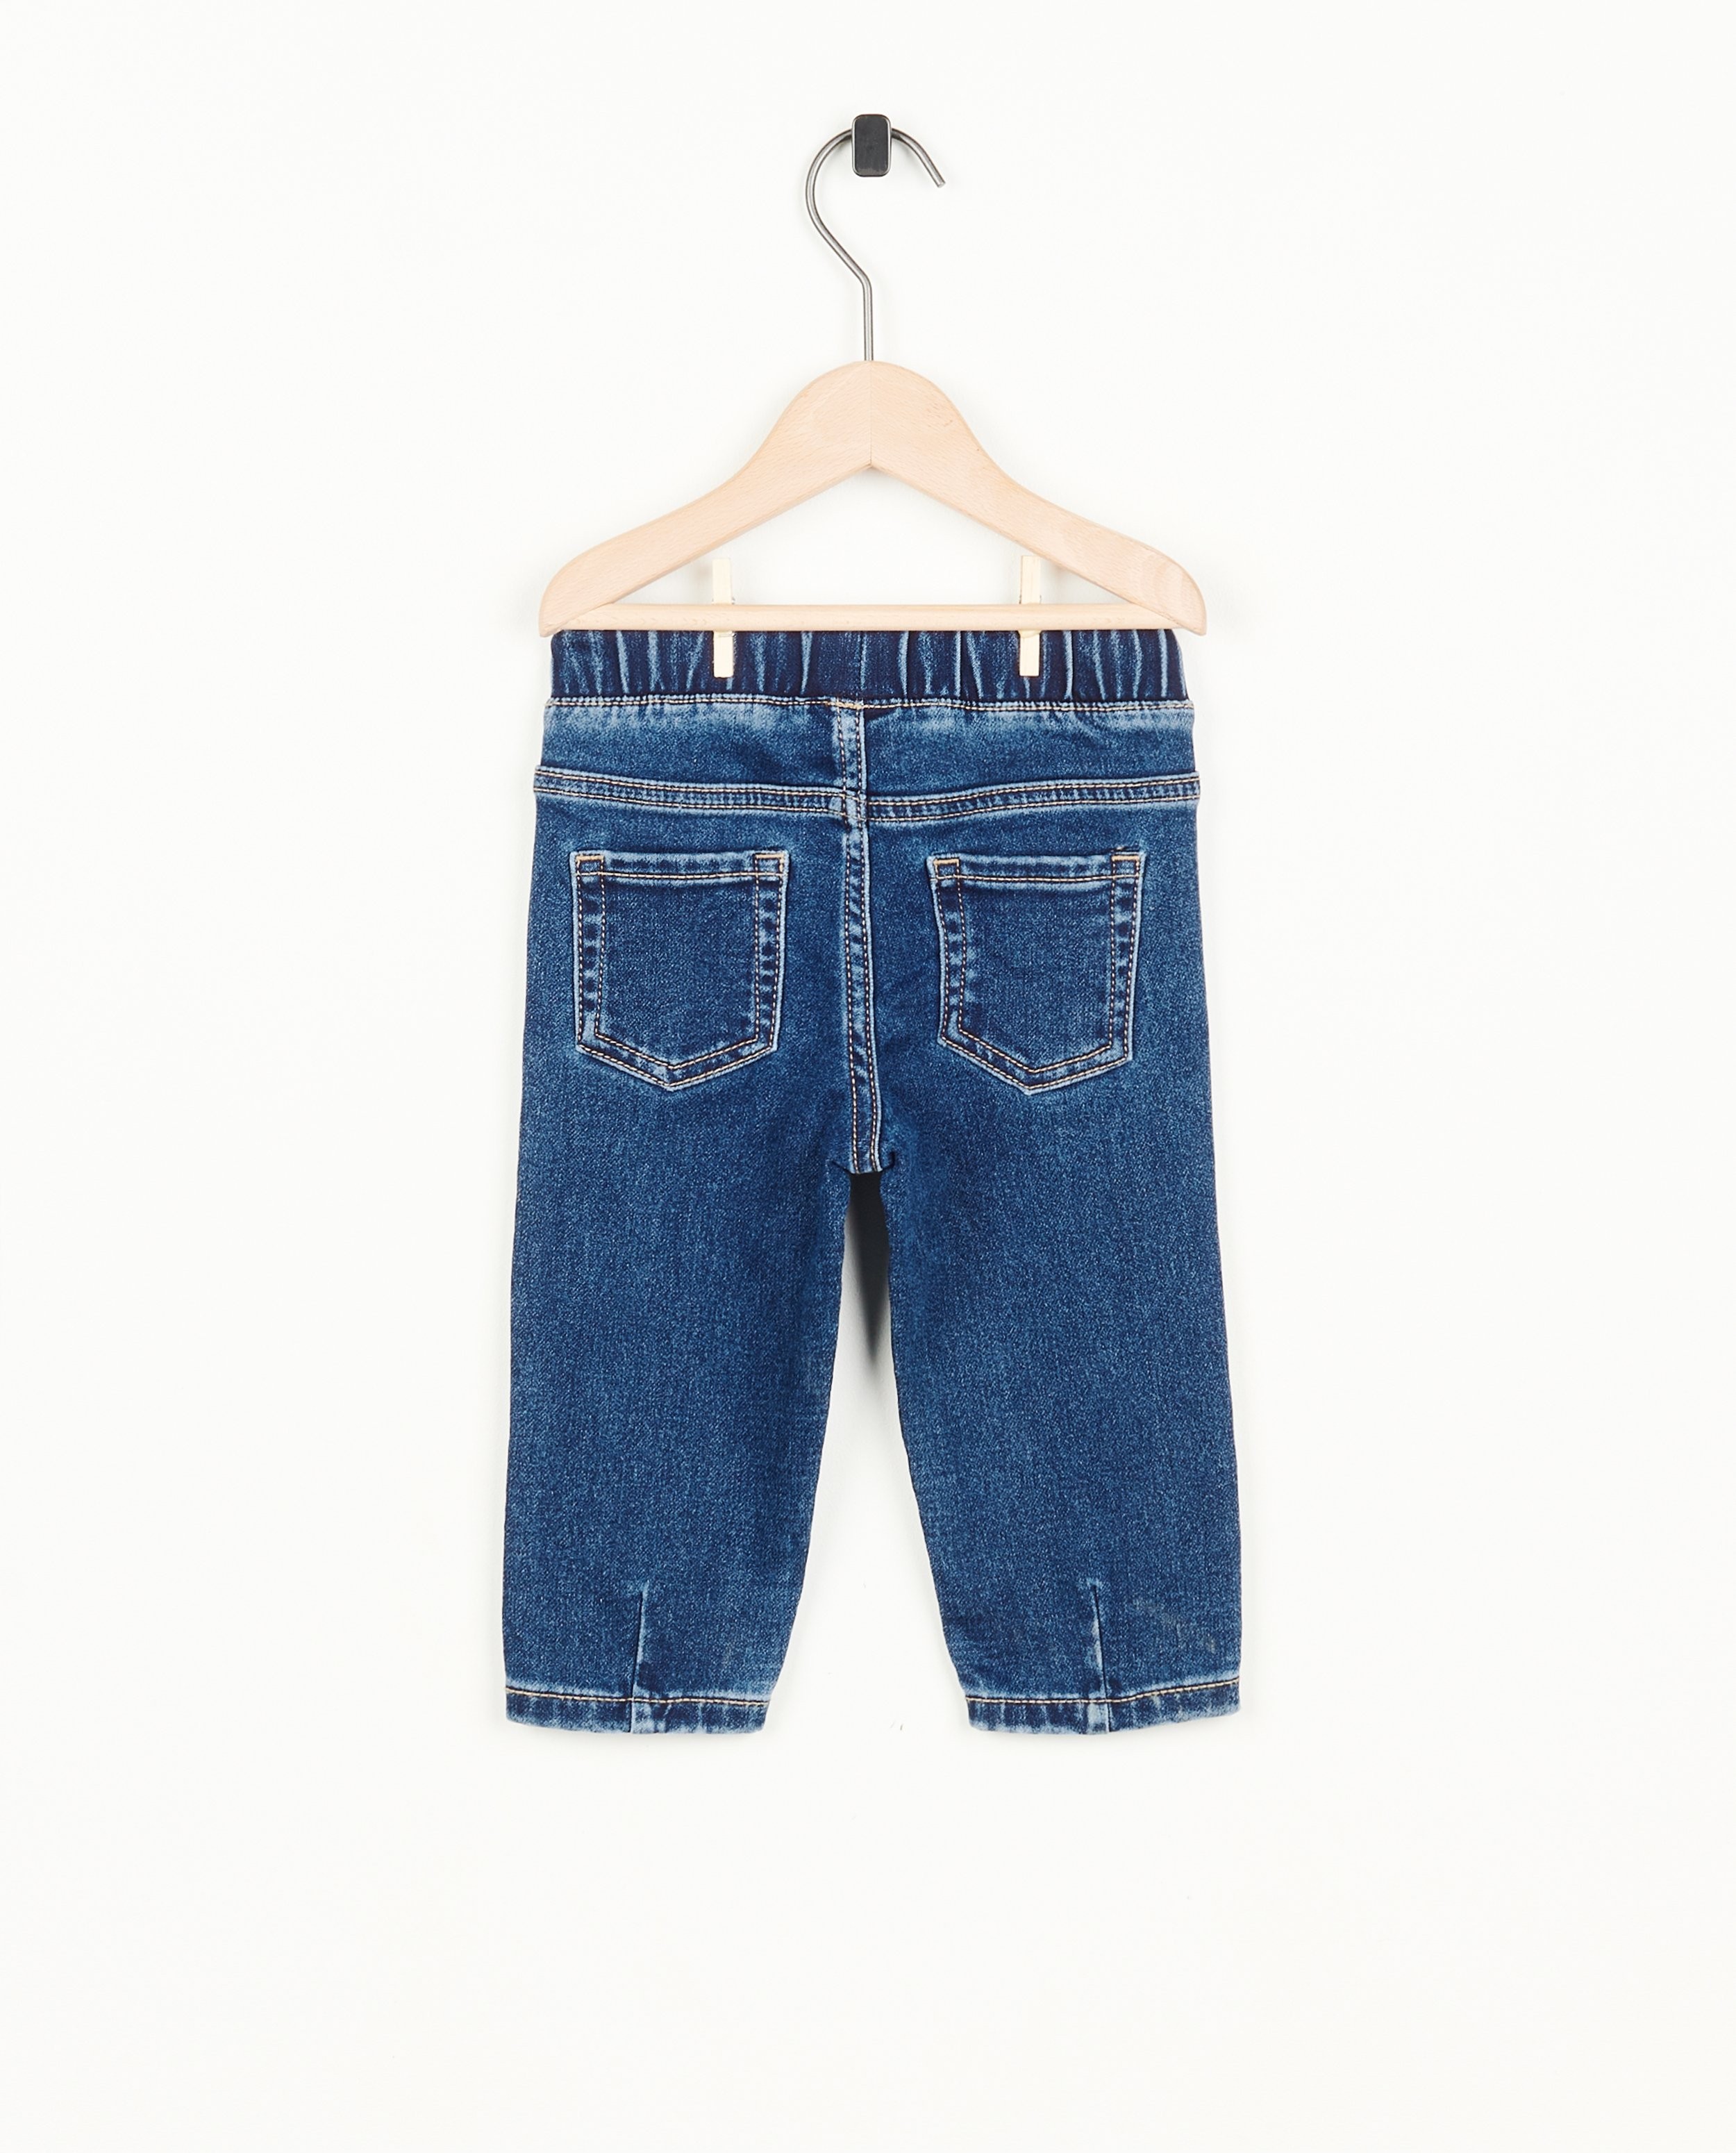 Jeans - Donkerblauwe jeans van sweat denim